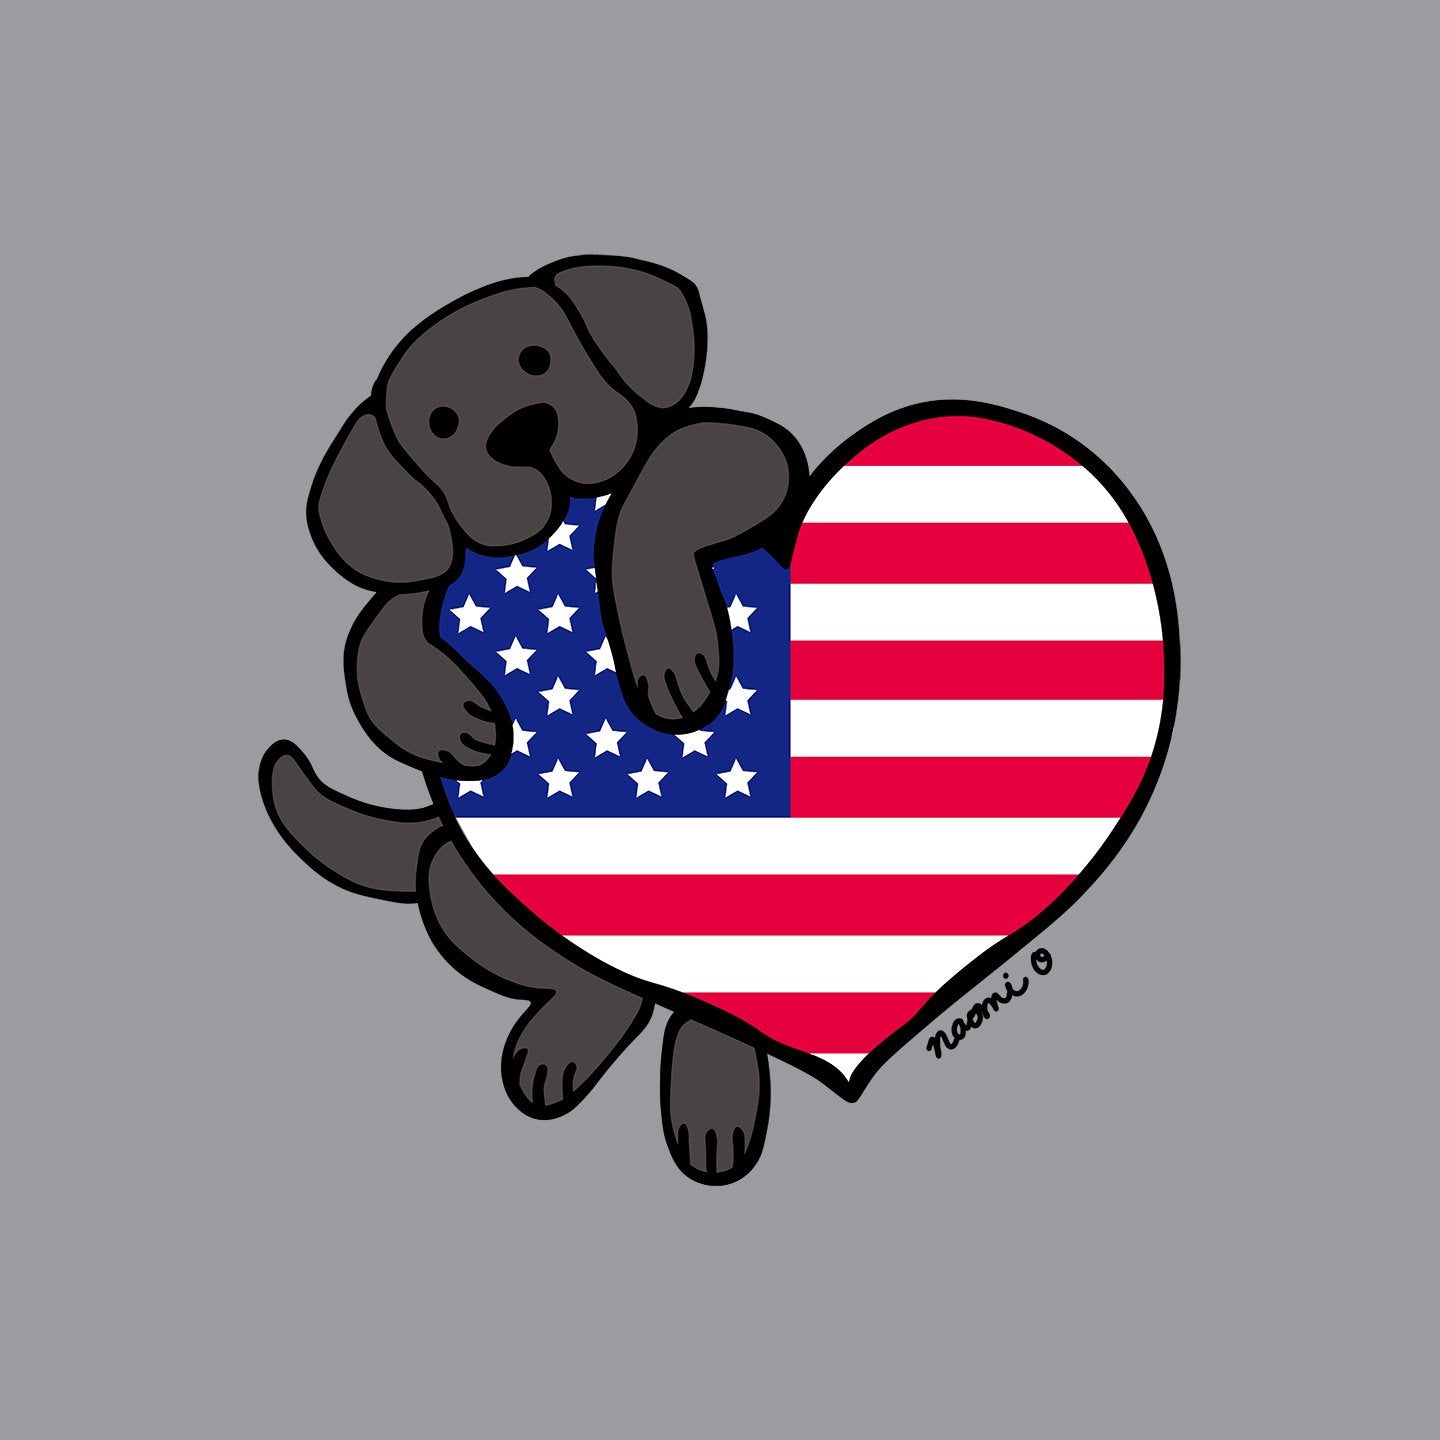 Black Lab USA Flag Heart Left Chest - Adult Unisex T-Shirt